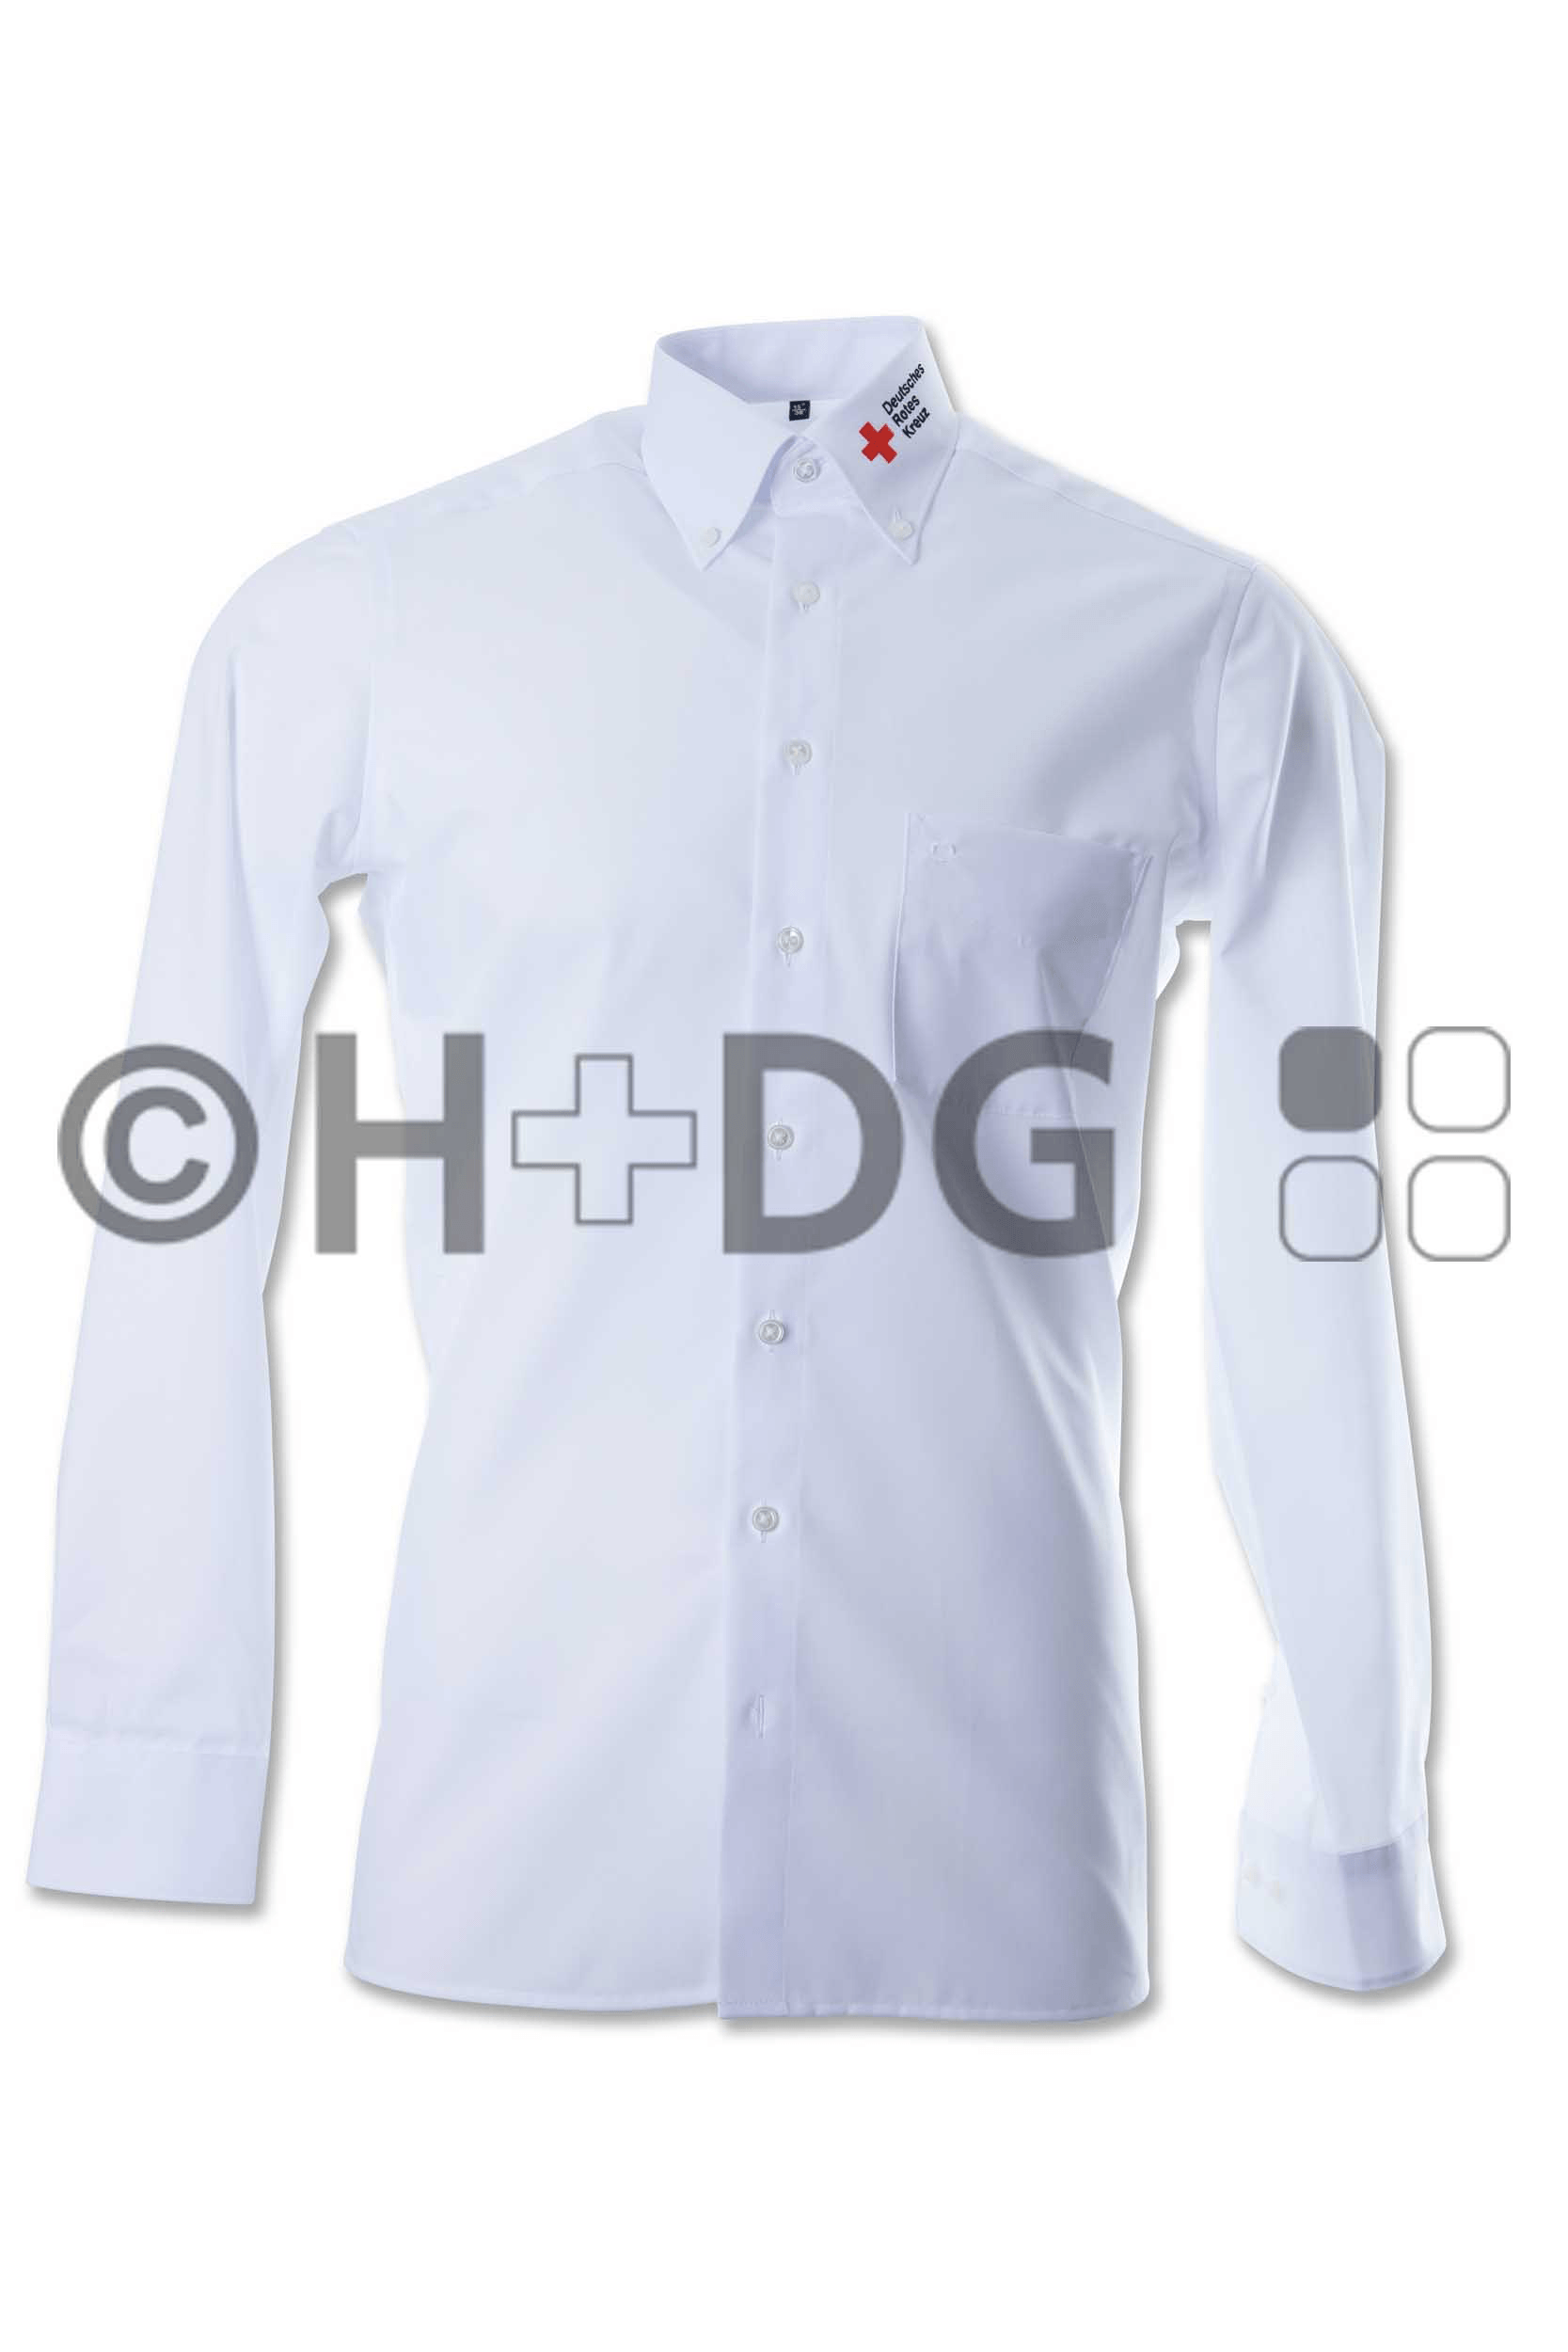 DRK-Olymp-Businesshemd Luxor (modern fit) weiß, 1/1-Arm oder 1/2-Arm | H+DG